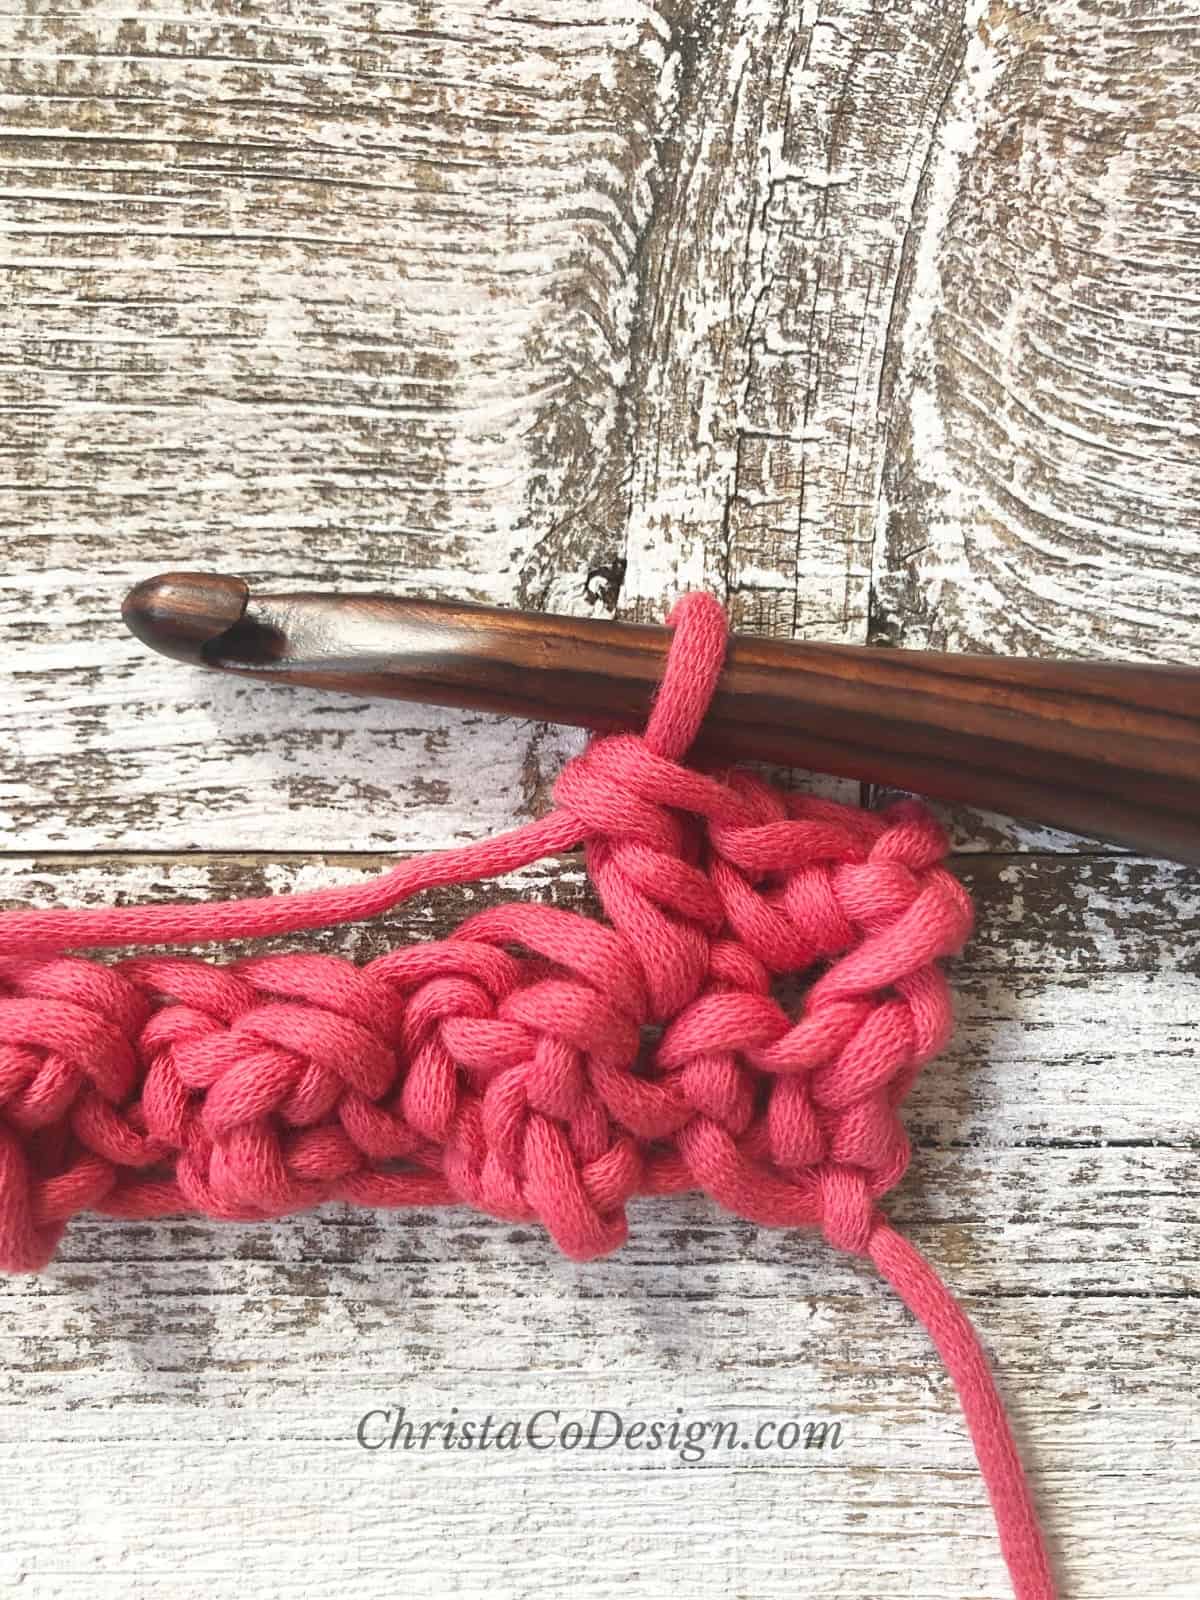 Double crochet in next stitch.